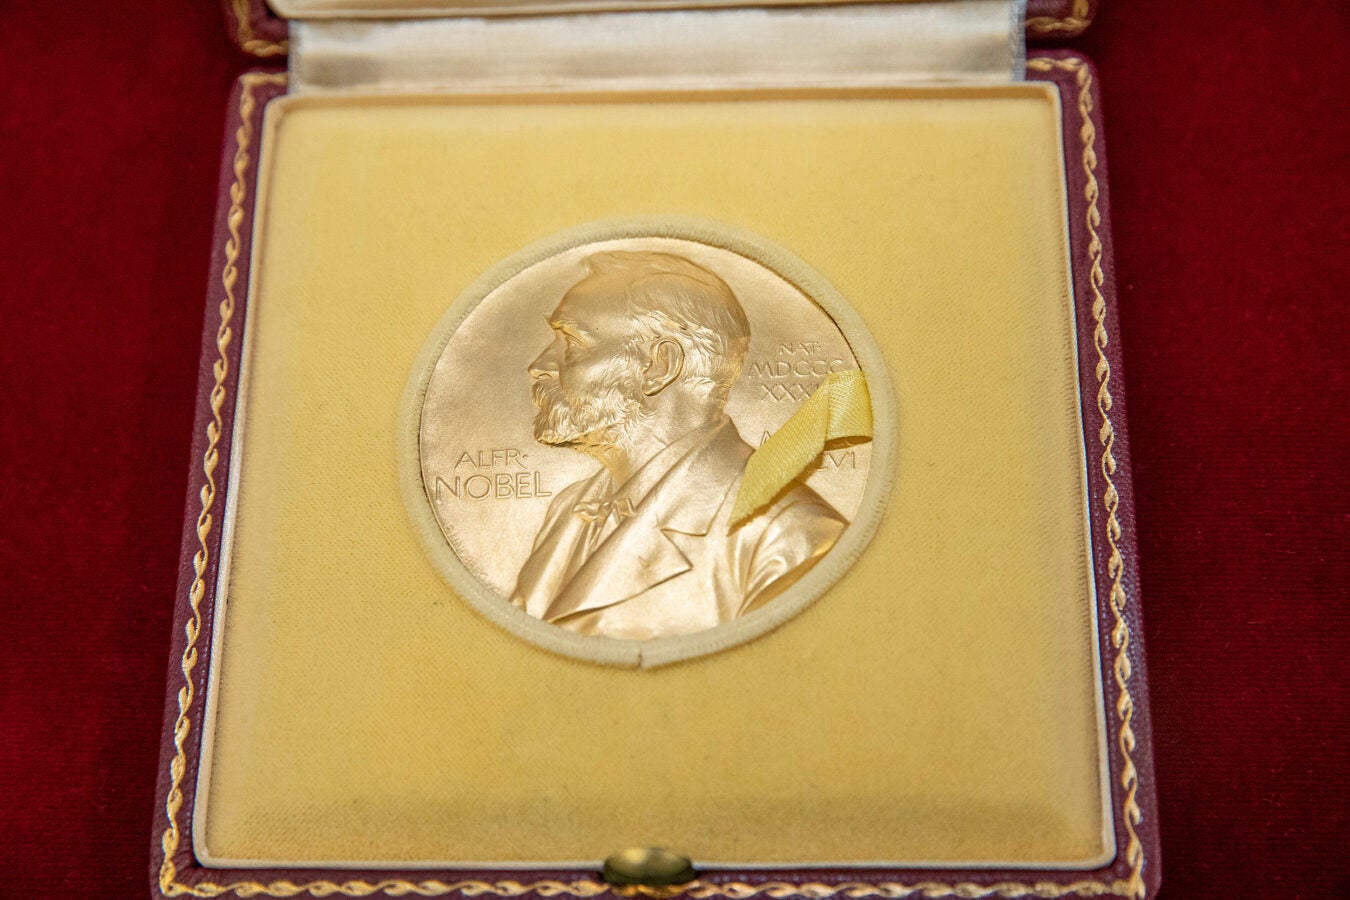 Photo of a Nobel Prize medal